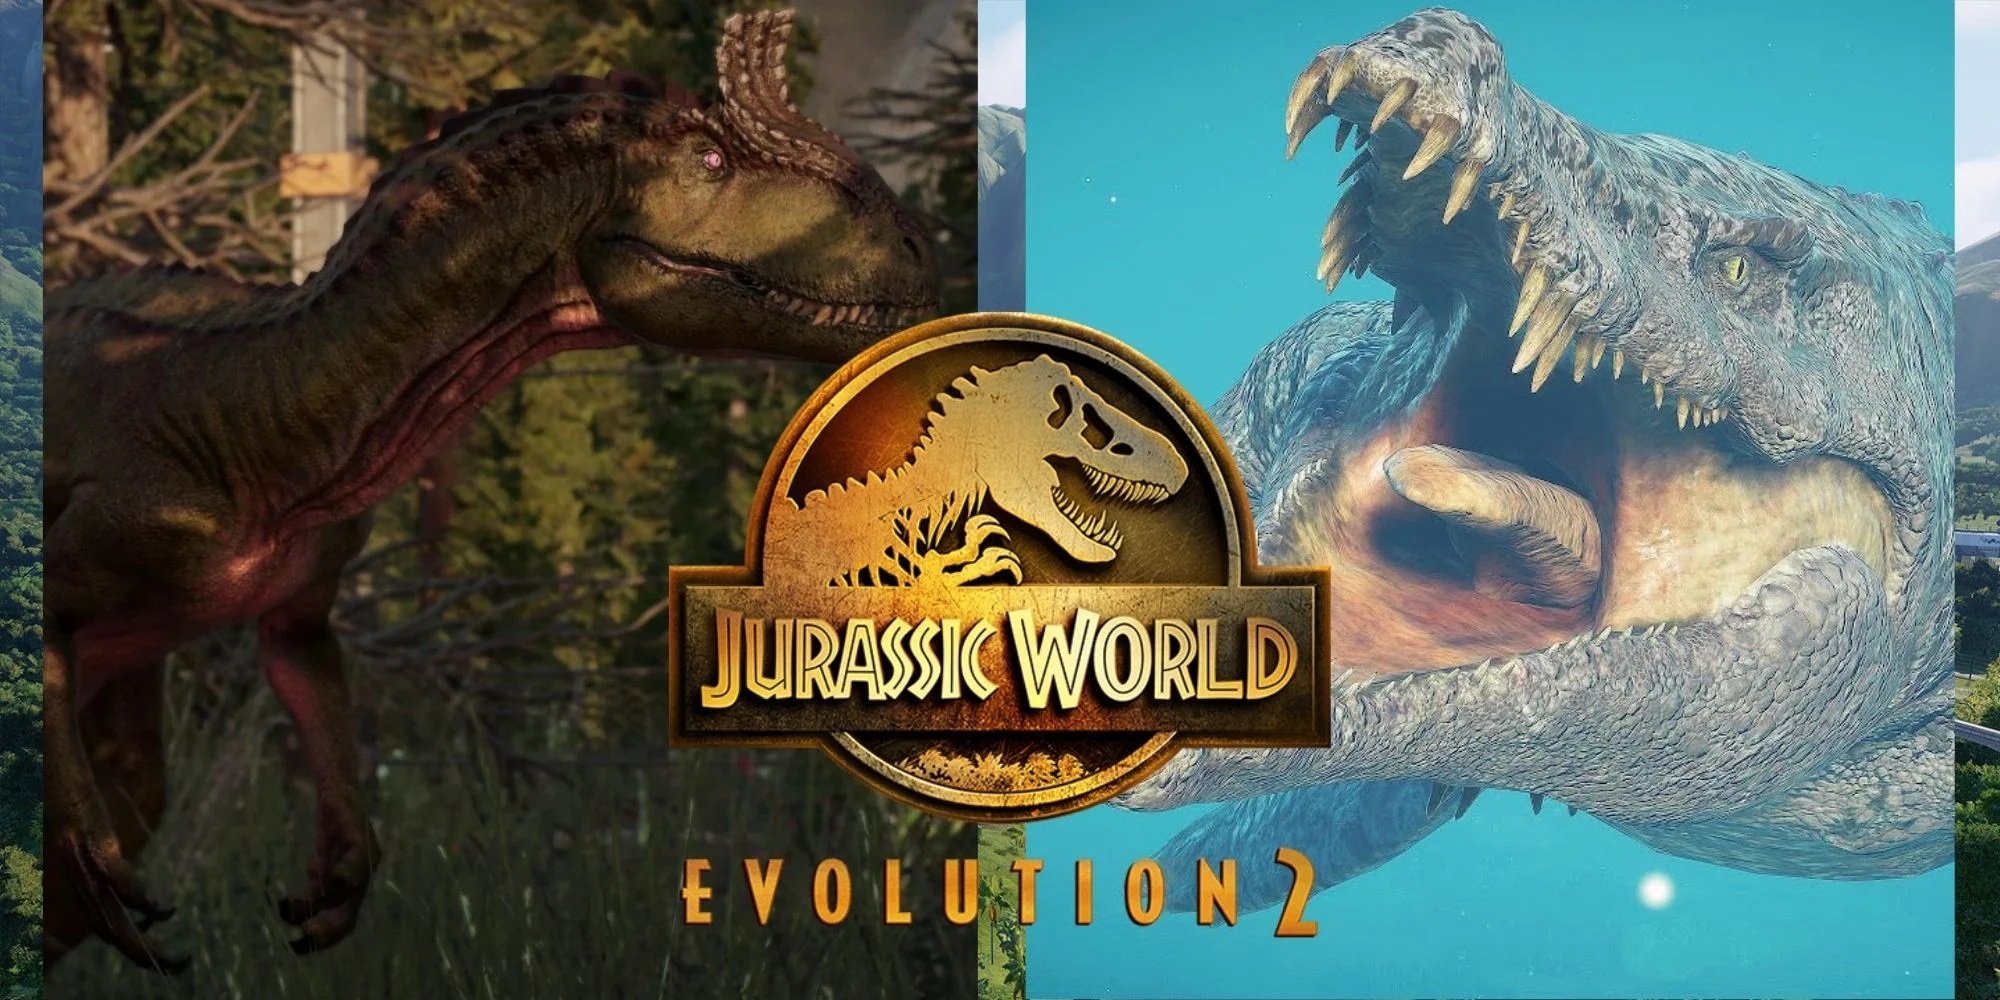 jurassic world evolution 2 logo